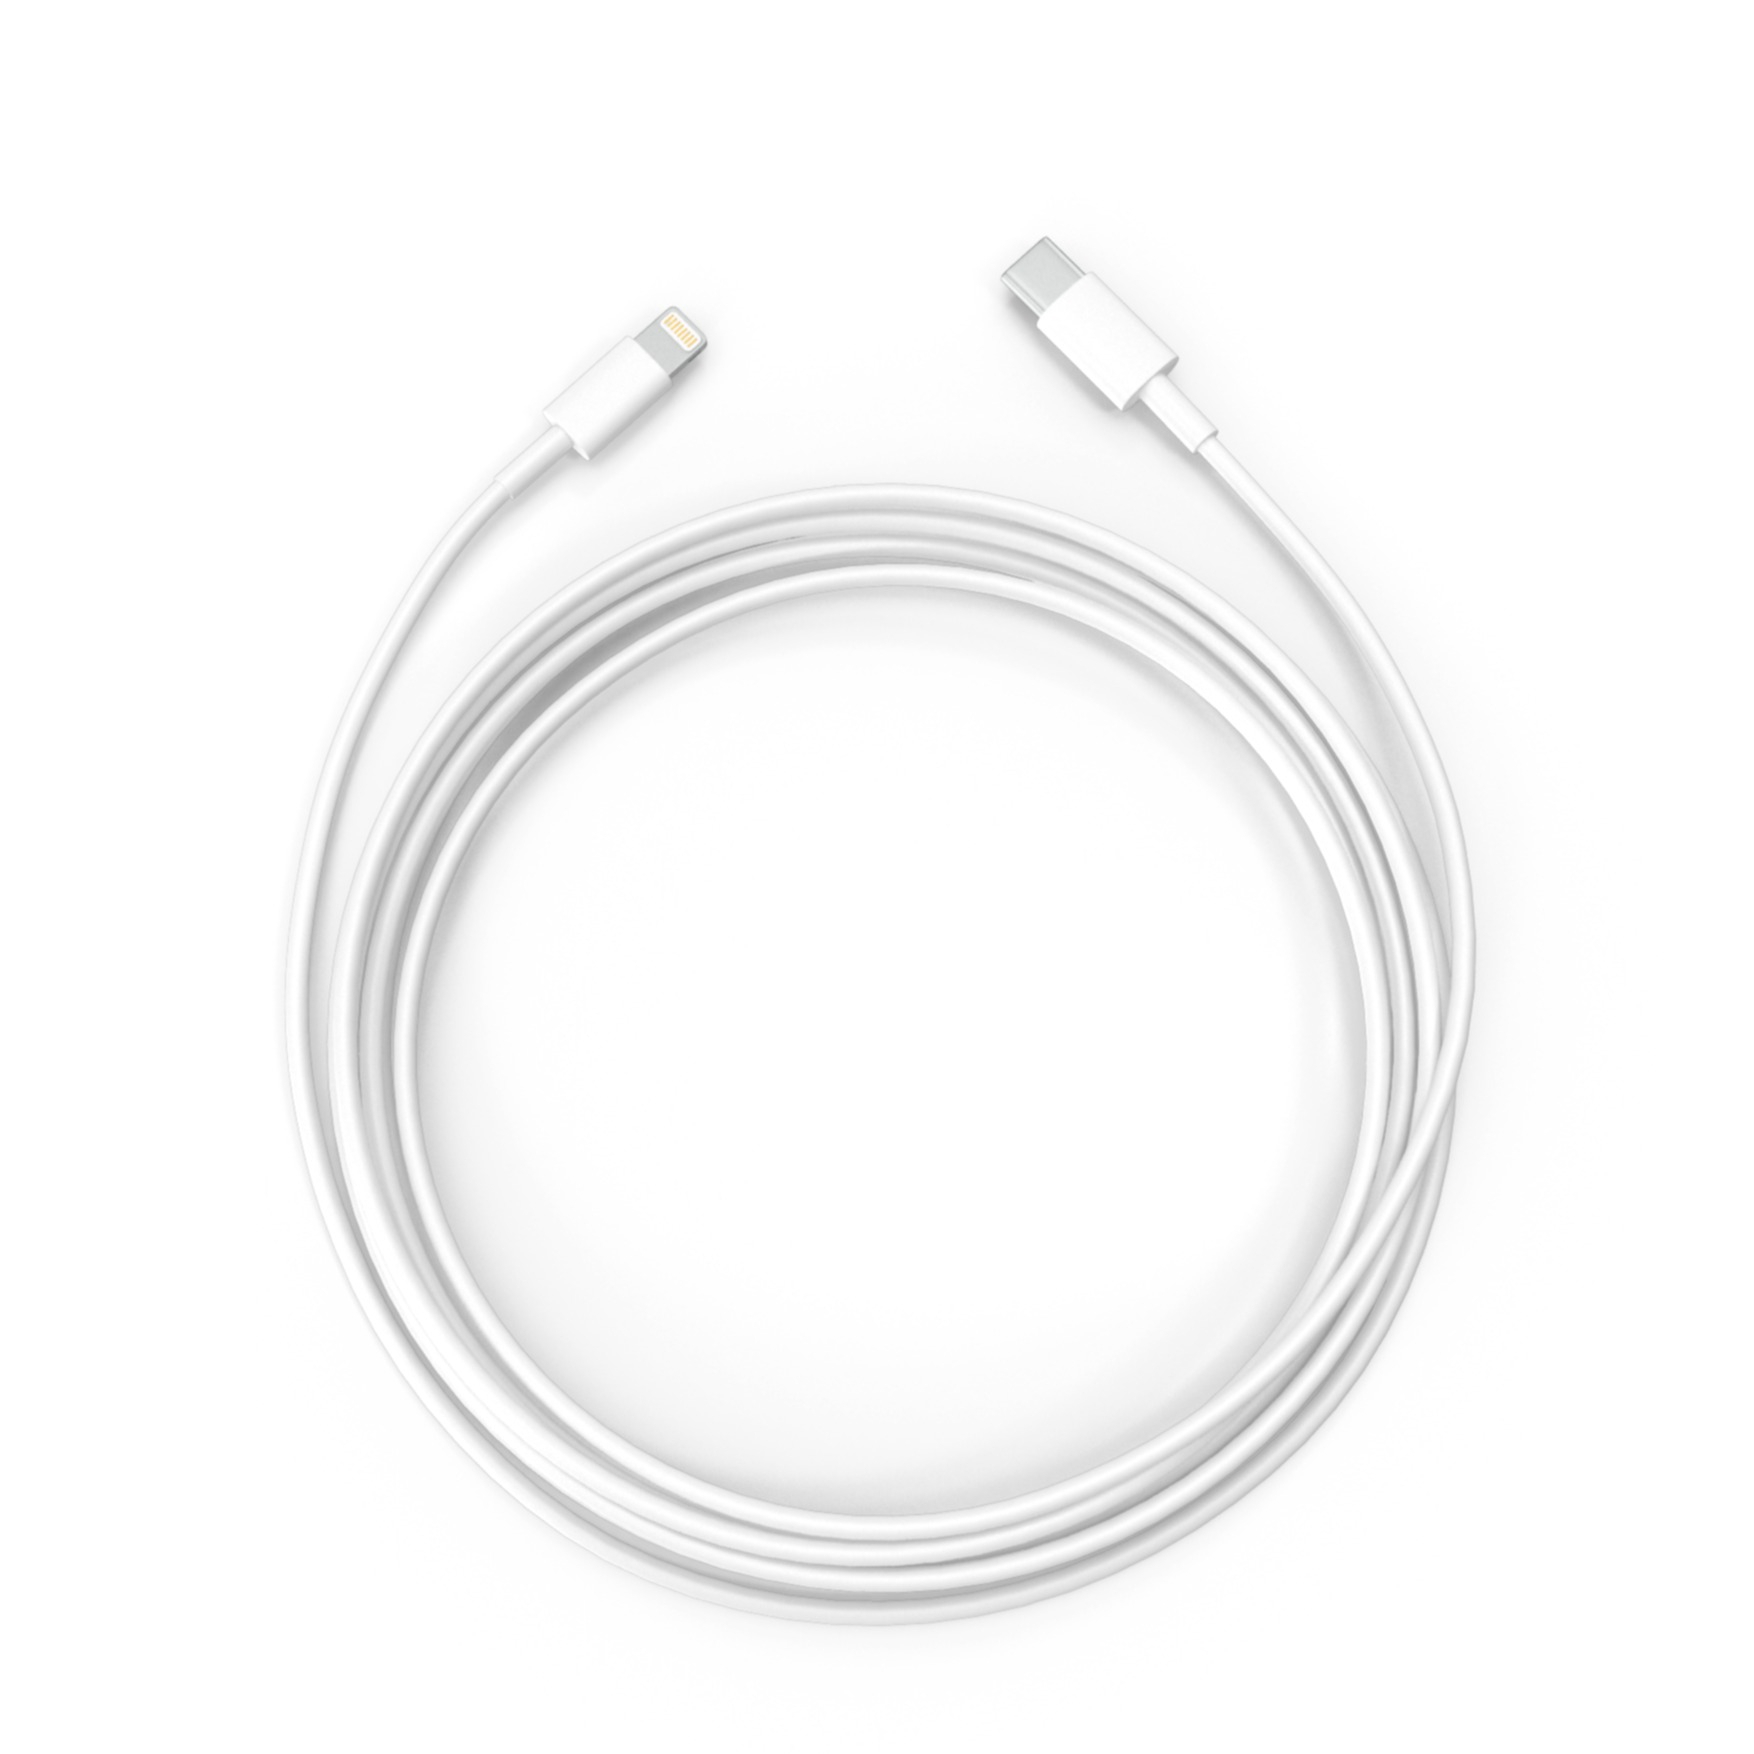 Image of Apple - (1m) iPhone 12 Lightning auf USB C Ladekabel Datenkabel MK0X2ZM/A - Weiss bei Apfelkiste.ch